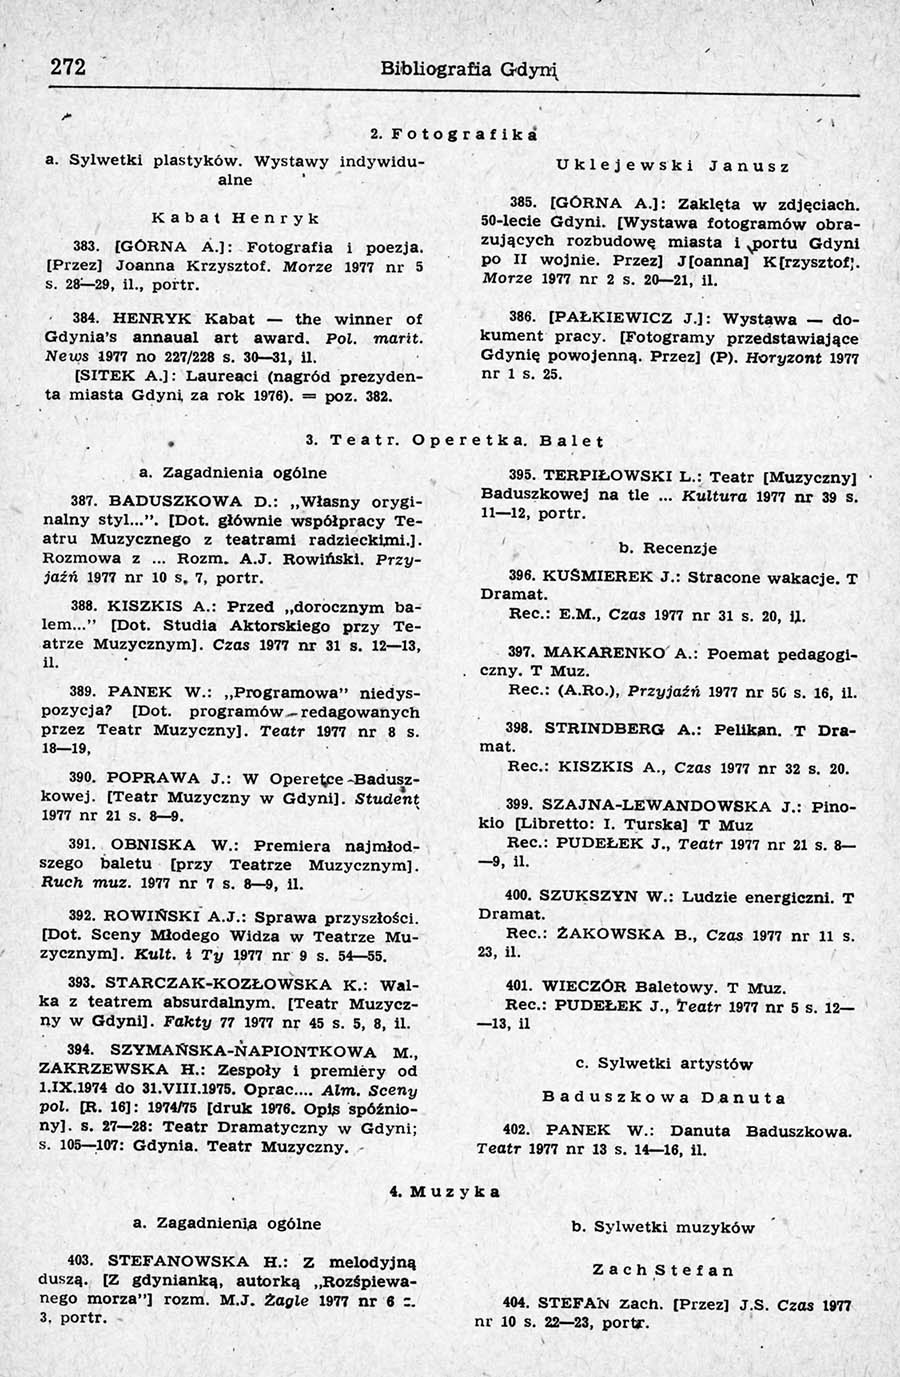 Bibliografia Gdyni za rok 1977